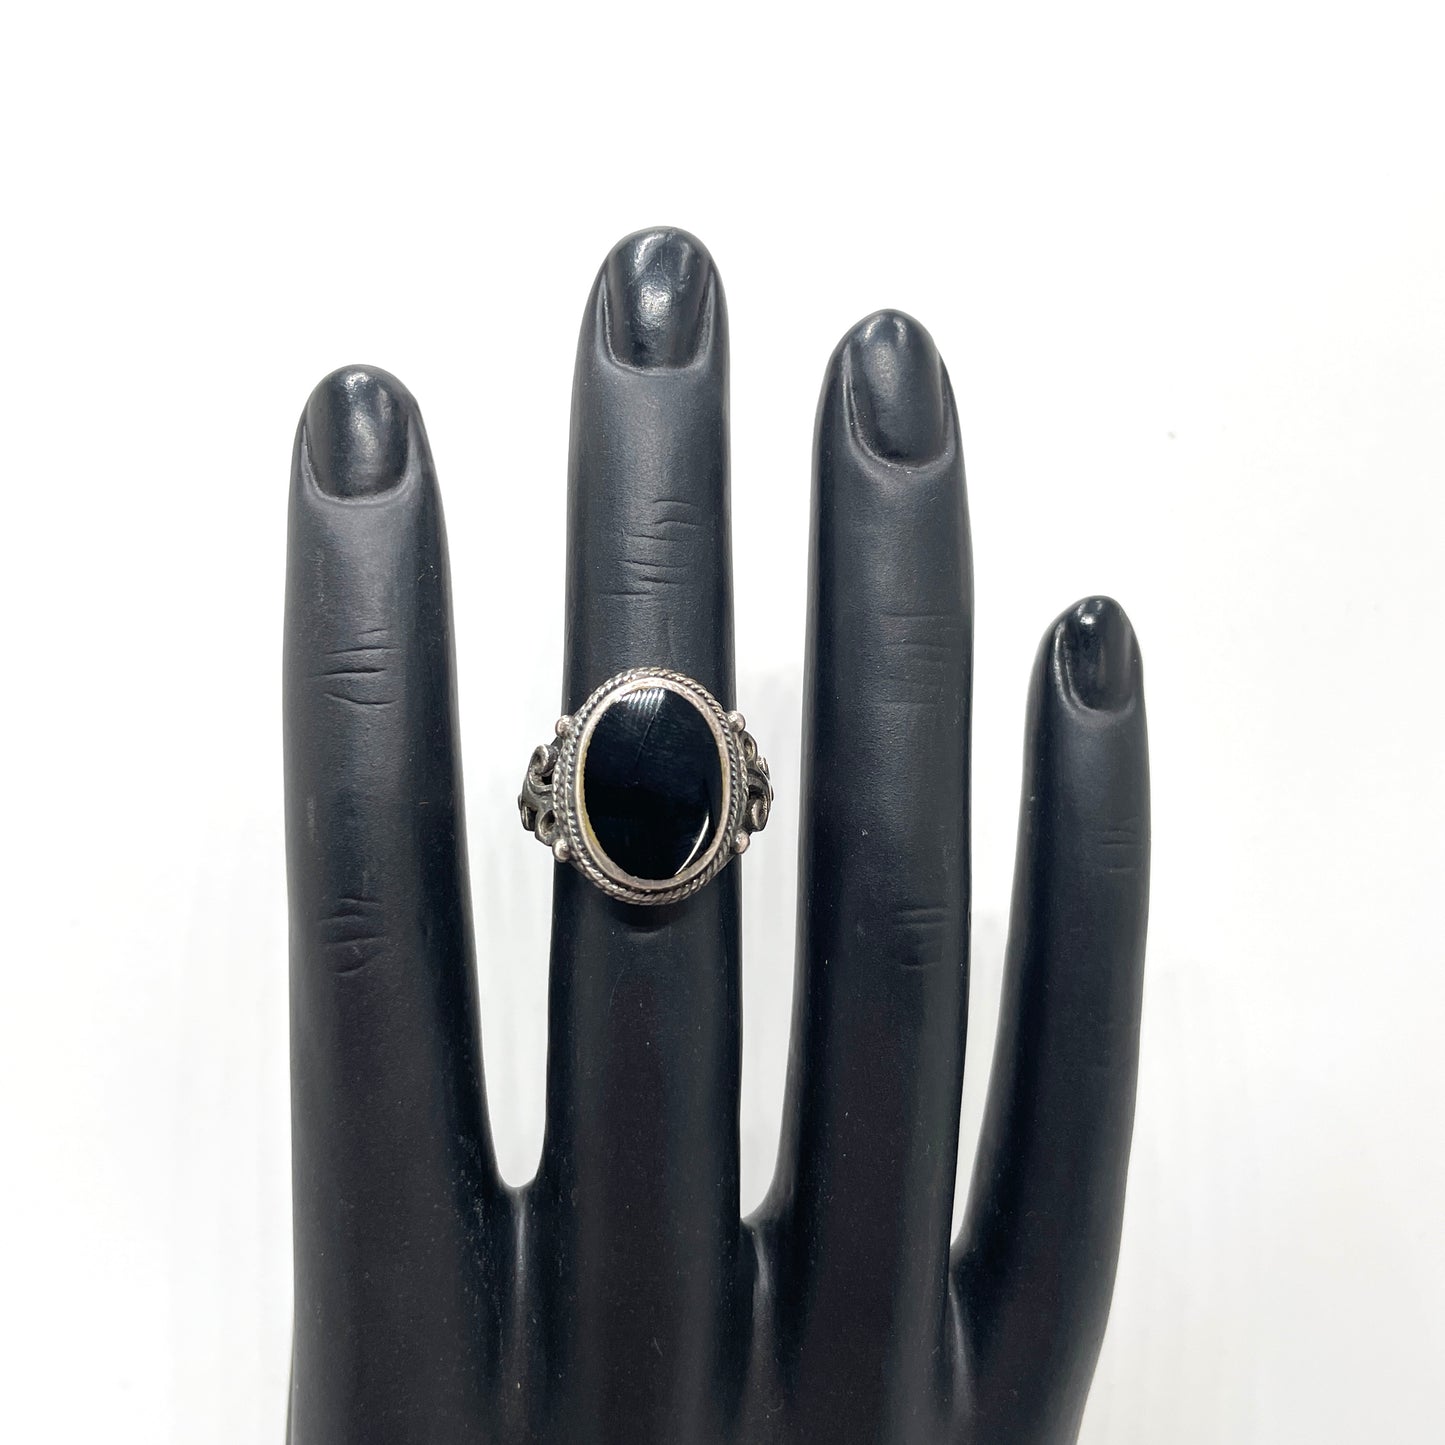 Vintage Sterling Silver & Black Onyx Ring - Size 5.5